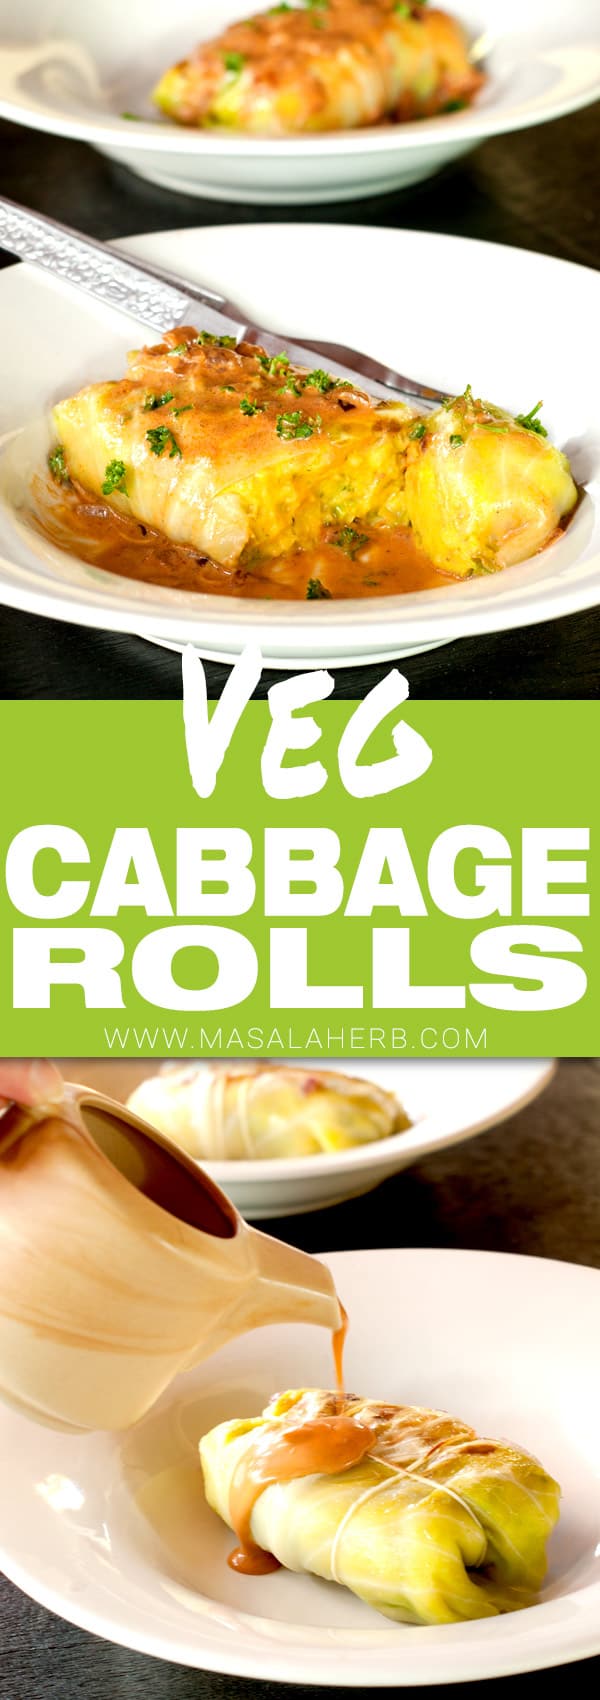 Vegetarian Stuffed Cabbage Rolls Recipe - Healthier German Stuffed Cabbage Rolls www.MasalaHerb.com #veg #cabbage #stuffed #masalaherb